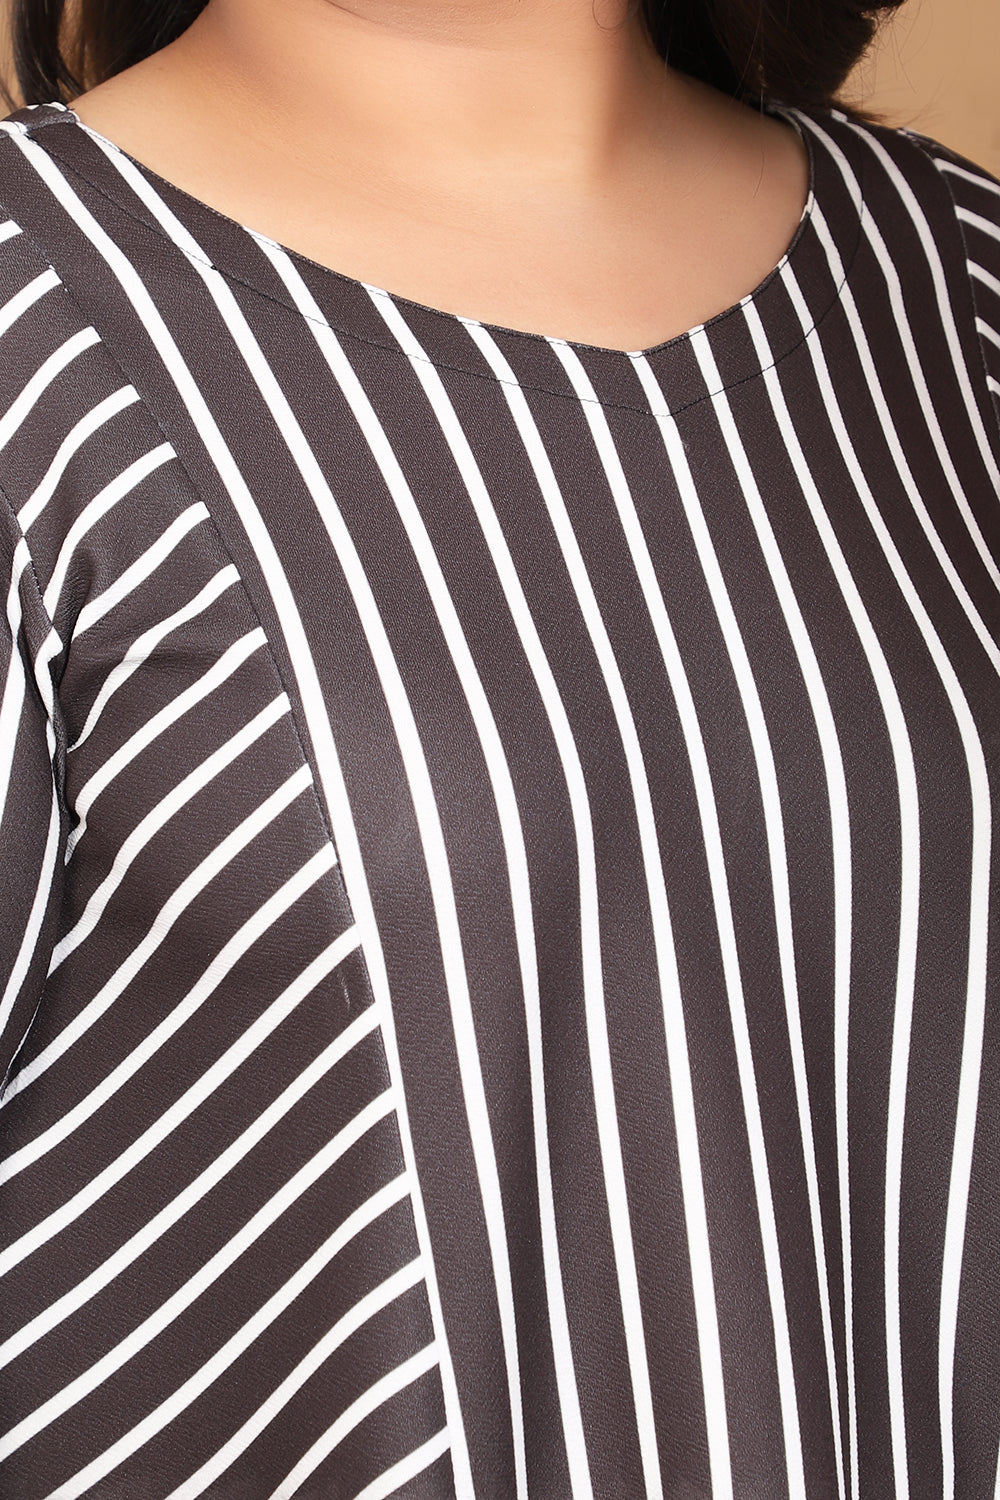 Buy Black Striped Printed Dress